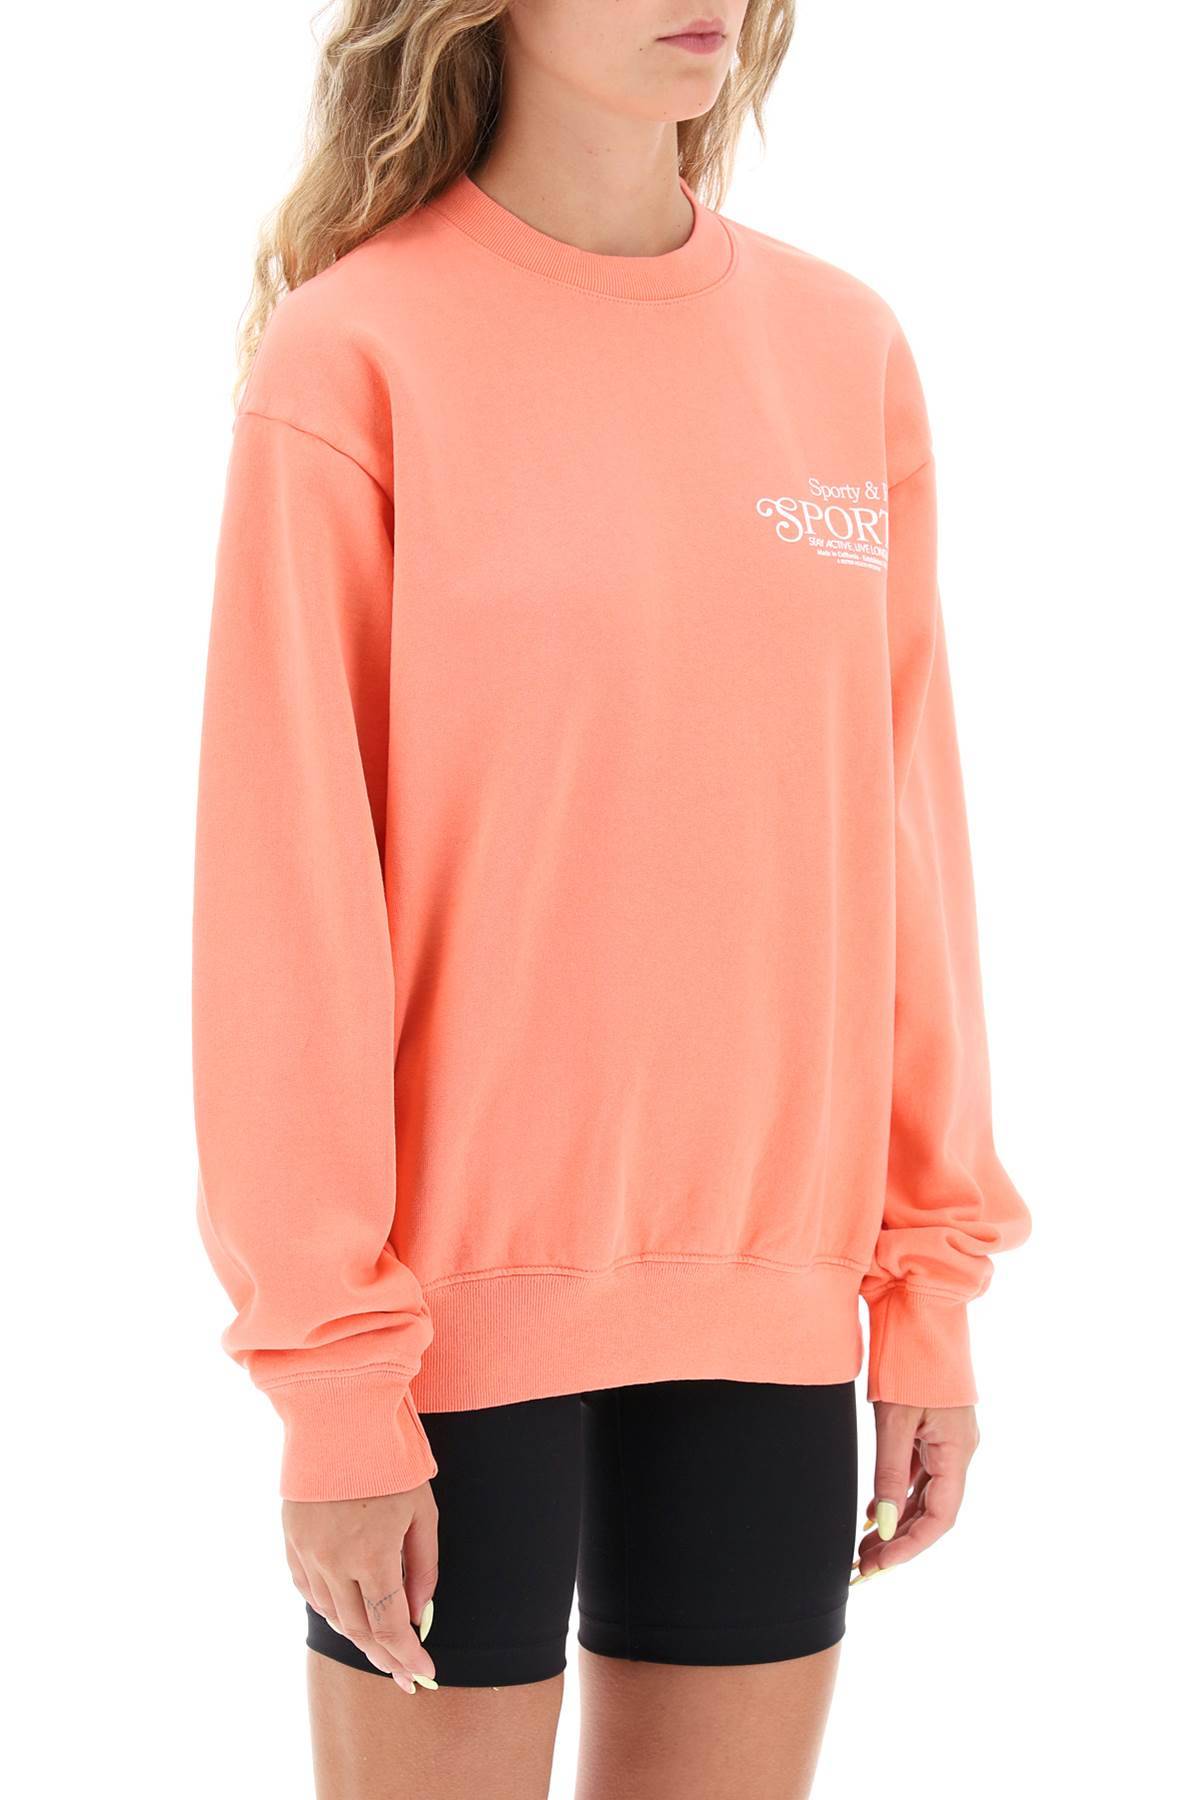 Shop Sporty And Rich 'bardot Sports' Sweatshirt In Pink